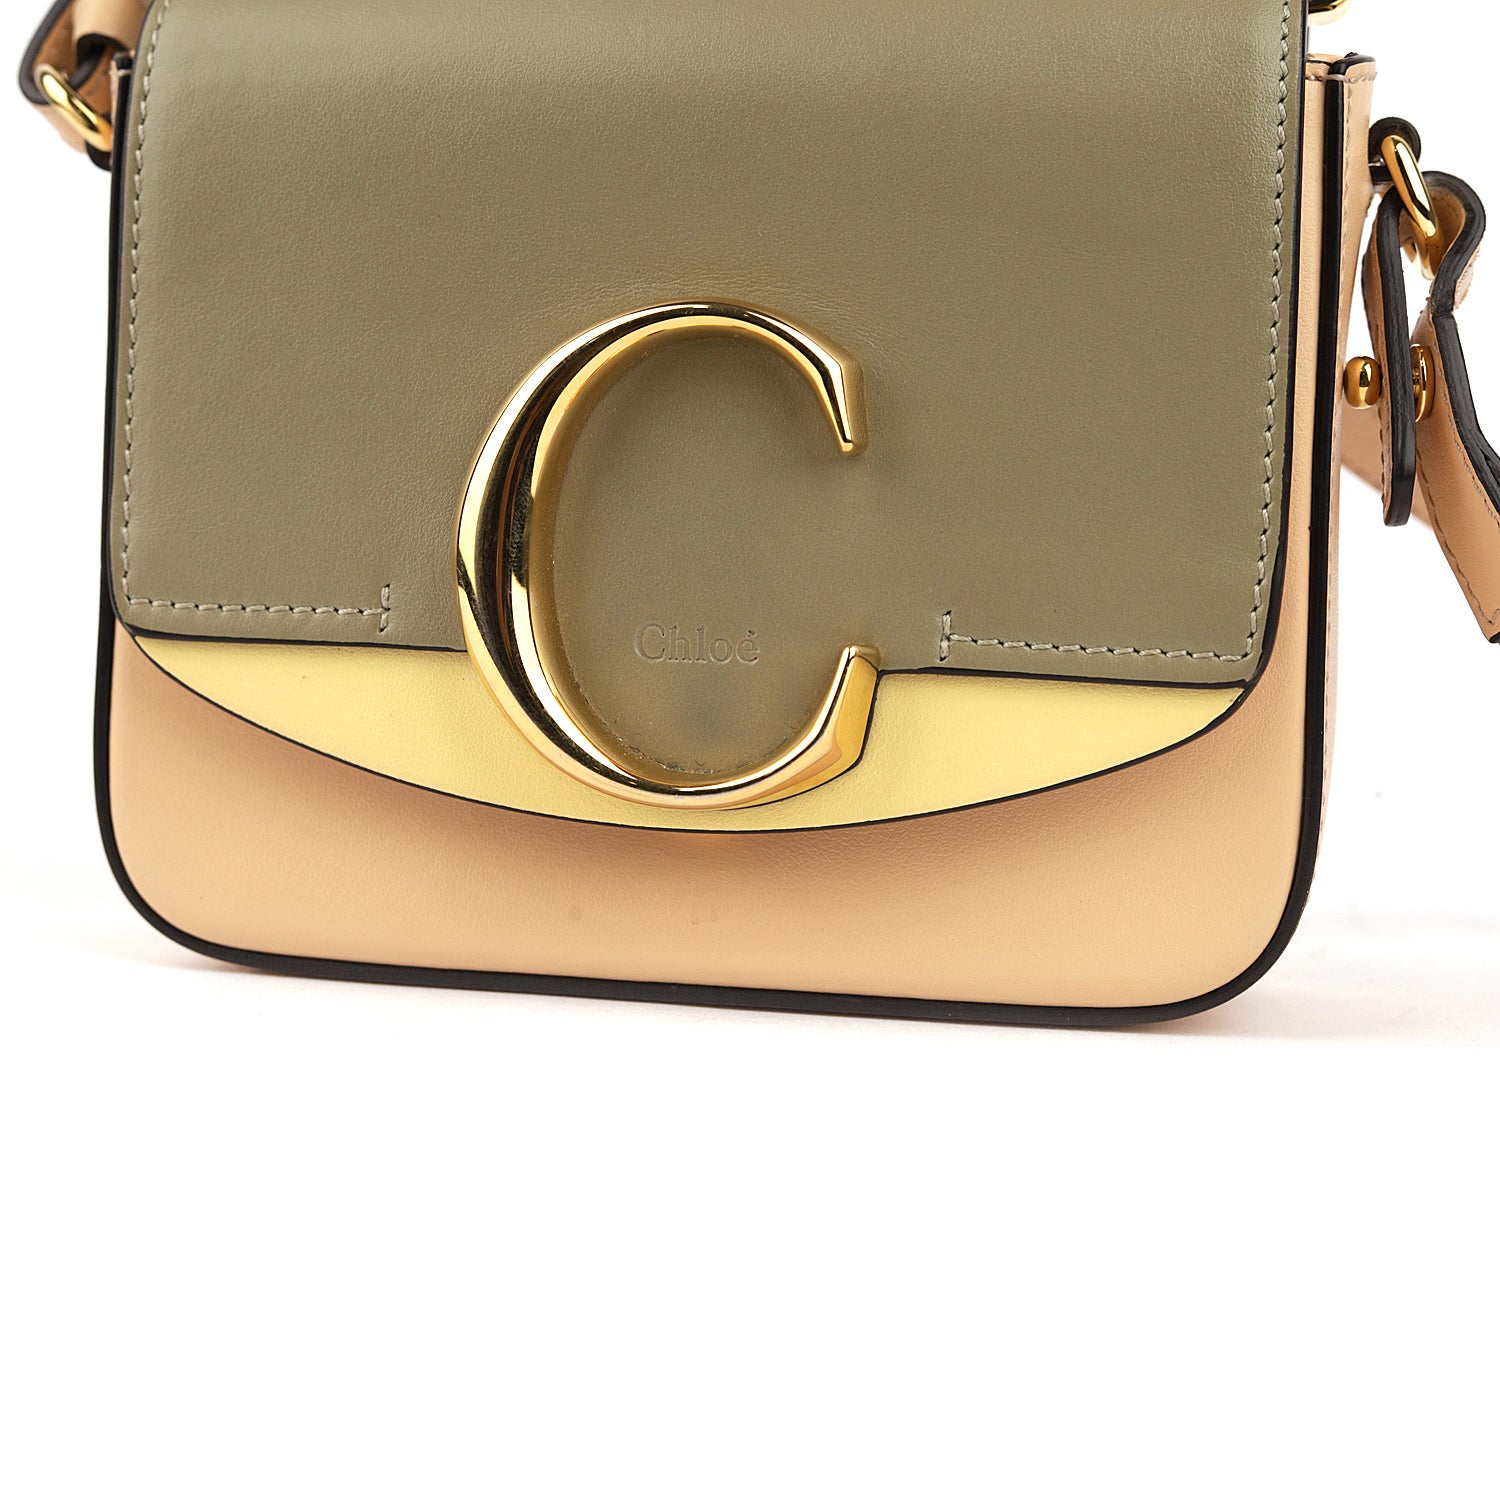 Chloe C leather mini bag